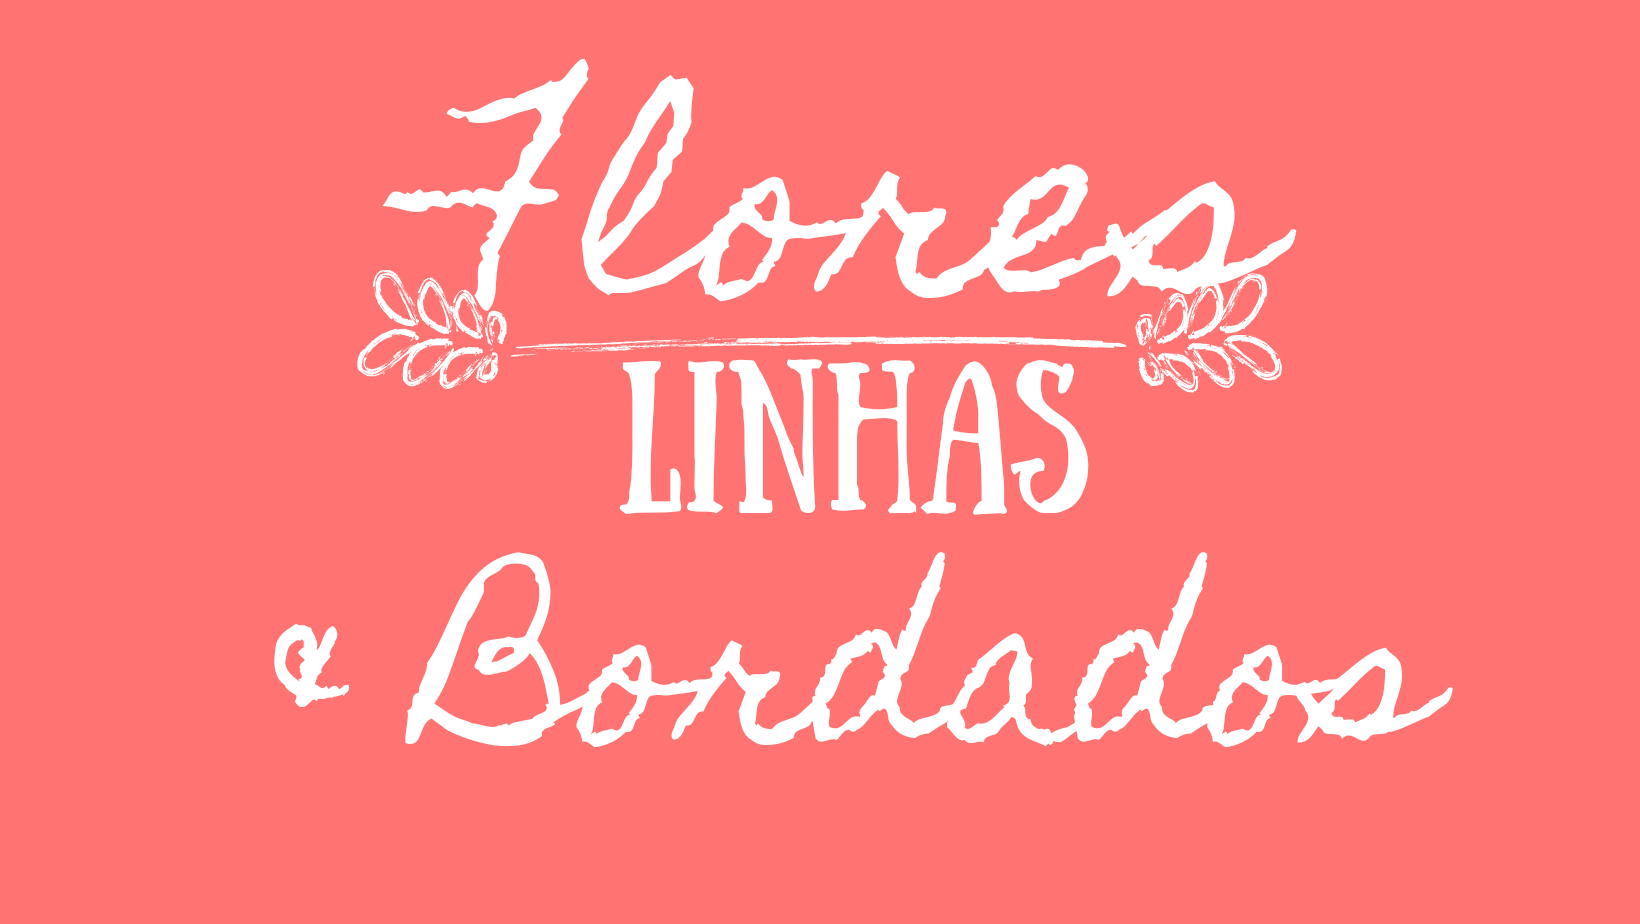 Flores,Linhas & Bordados on Tumblr